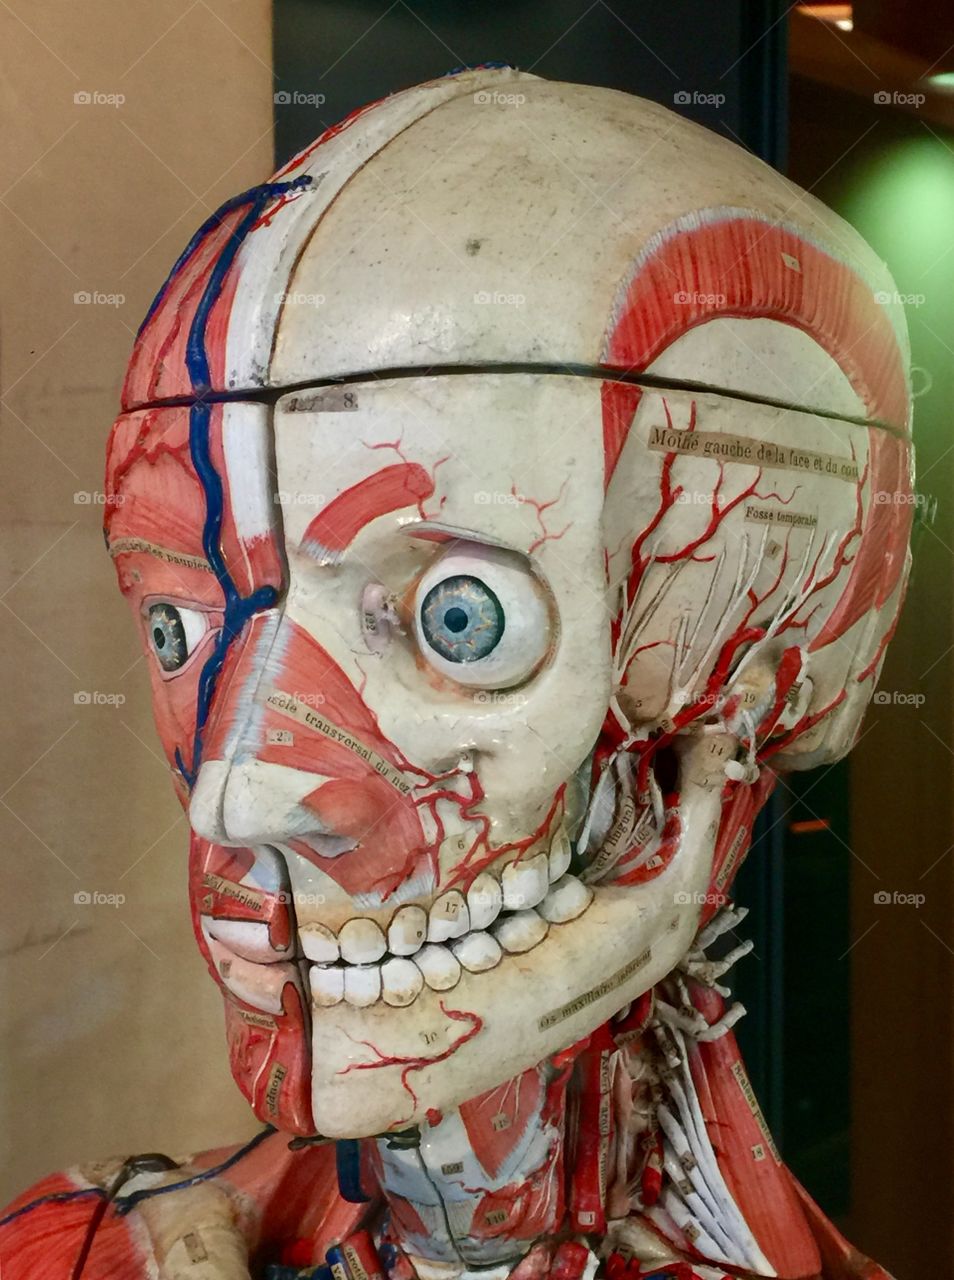 Anatomic model 